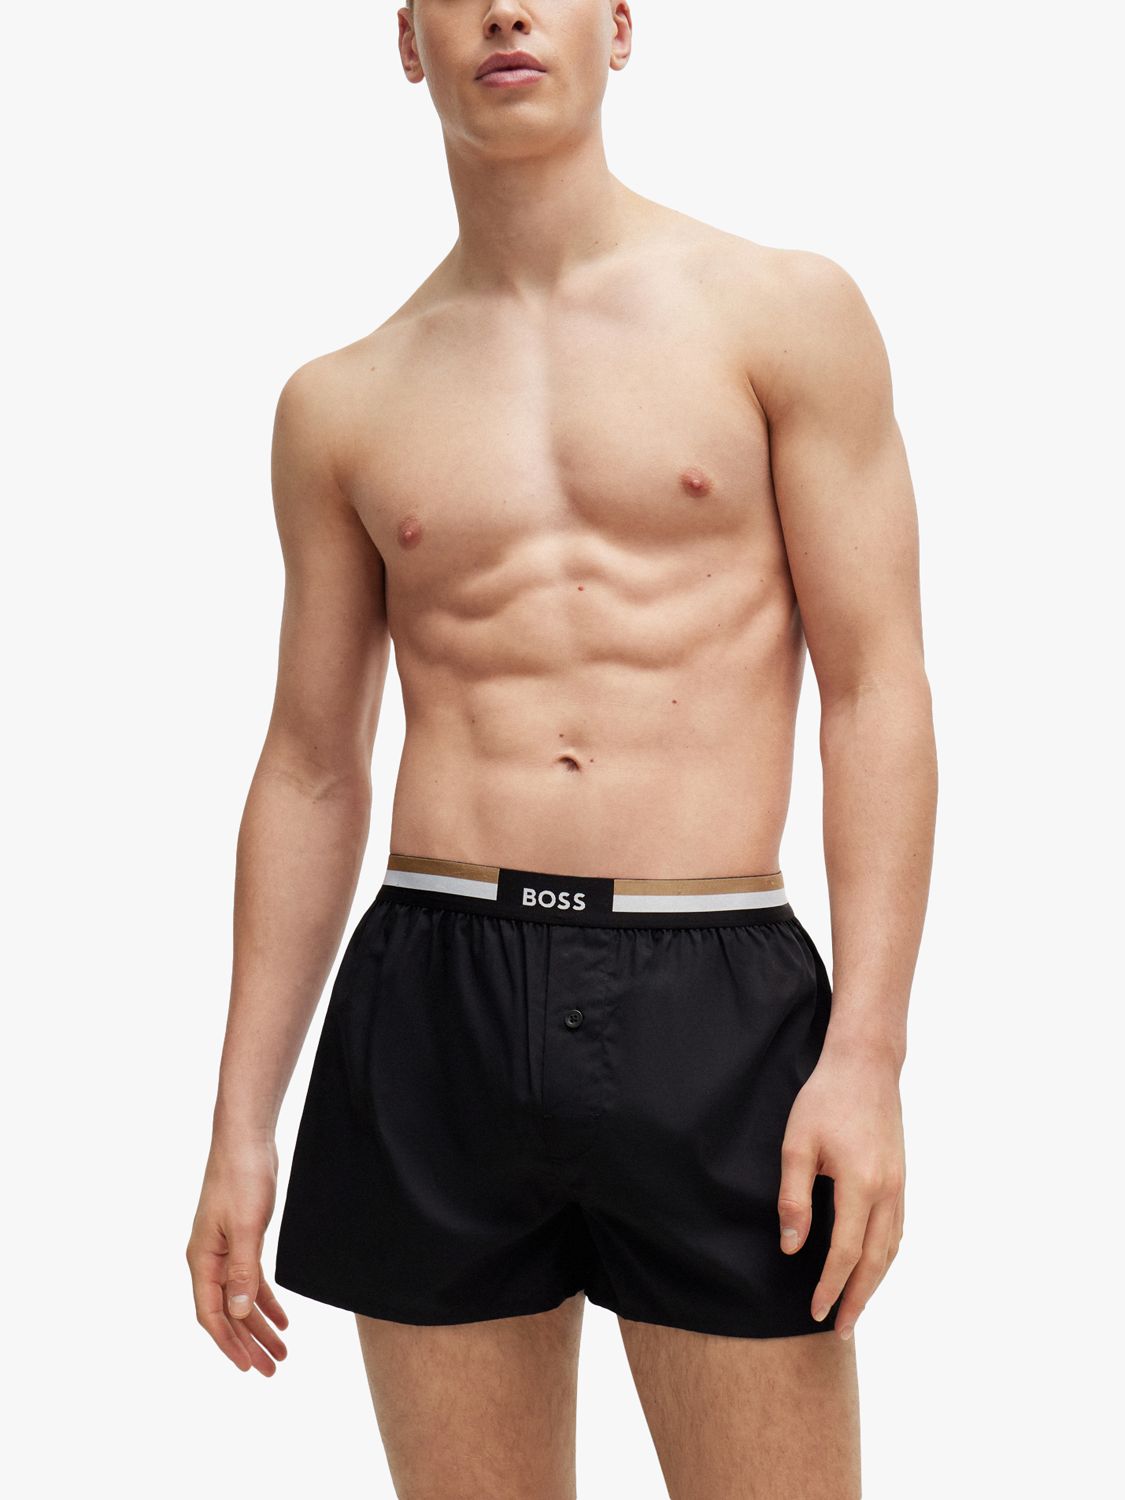 BOSS Boxer Shorts, Pack of 2, Beige/Black, L